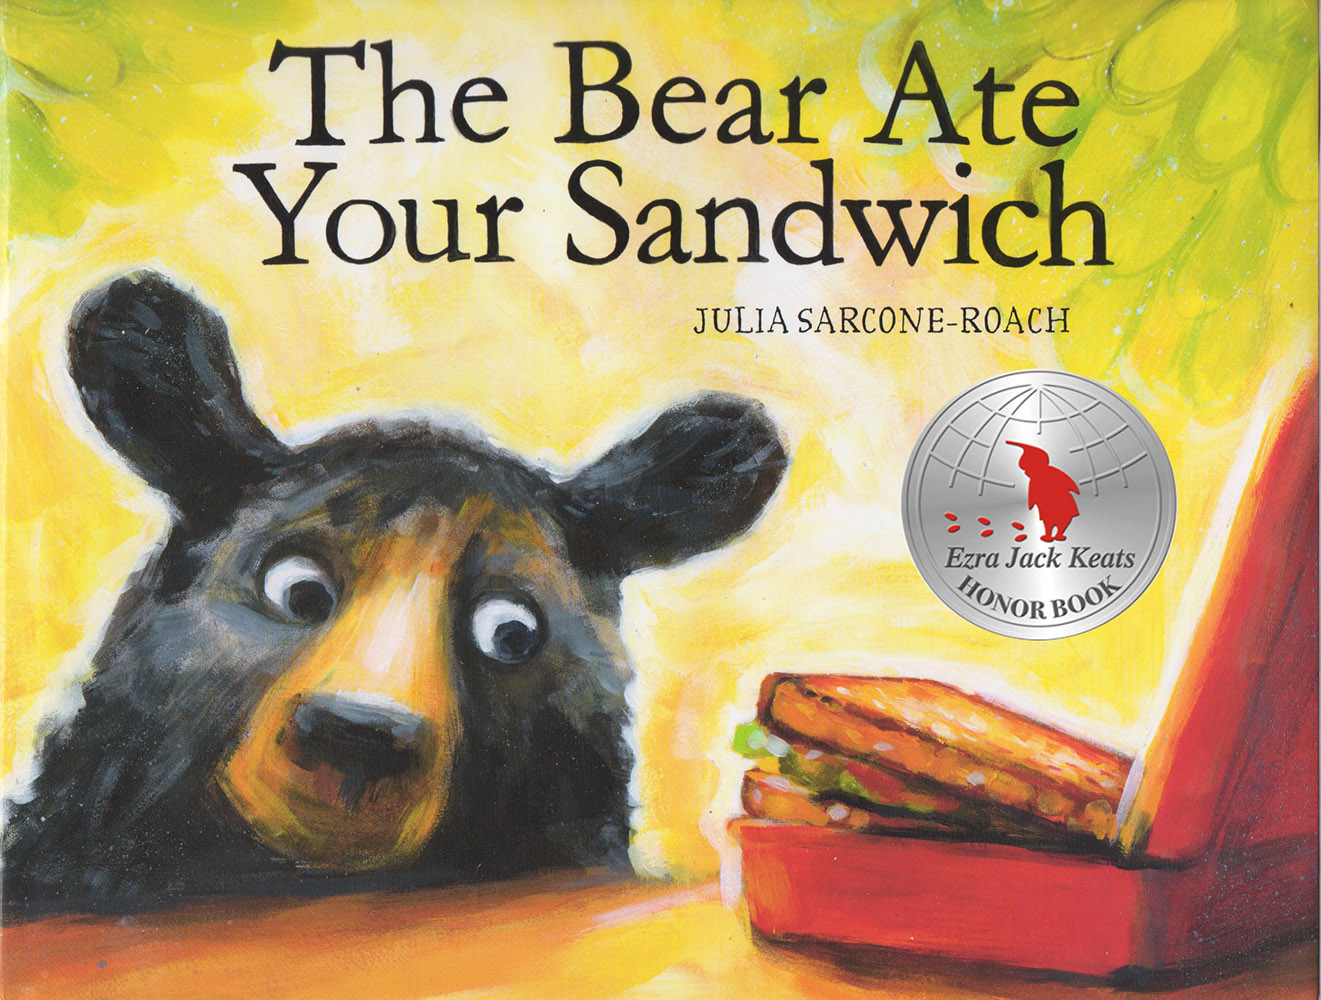 Sarcone-Roach, Julia 2015_01 THE BEAR ATE YOUR SANDWICH - PB - RLM PR.jpg